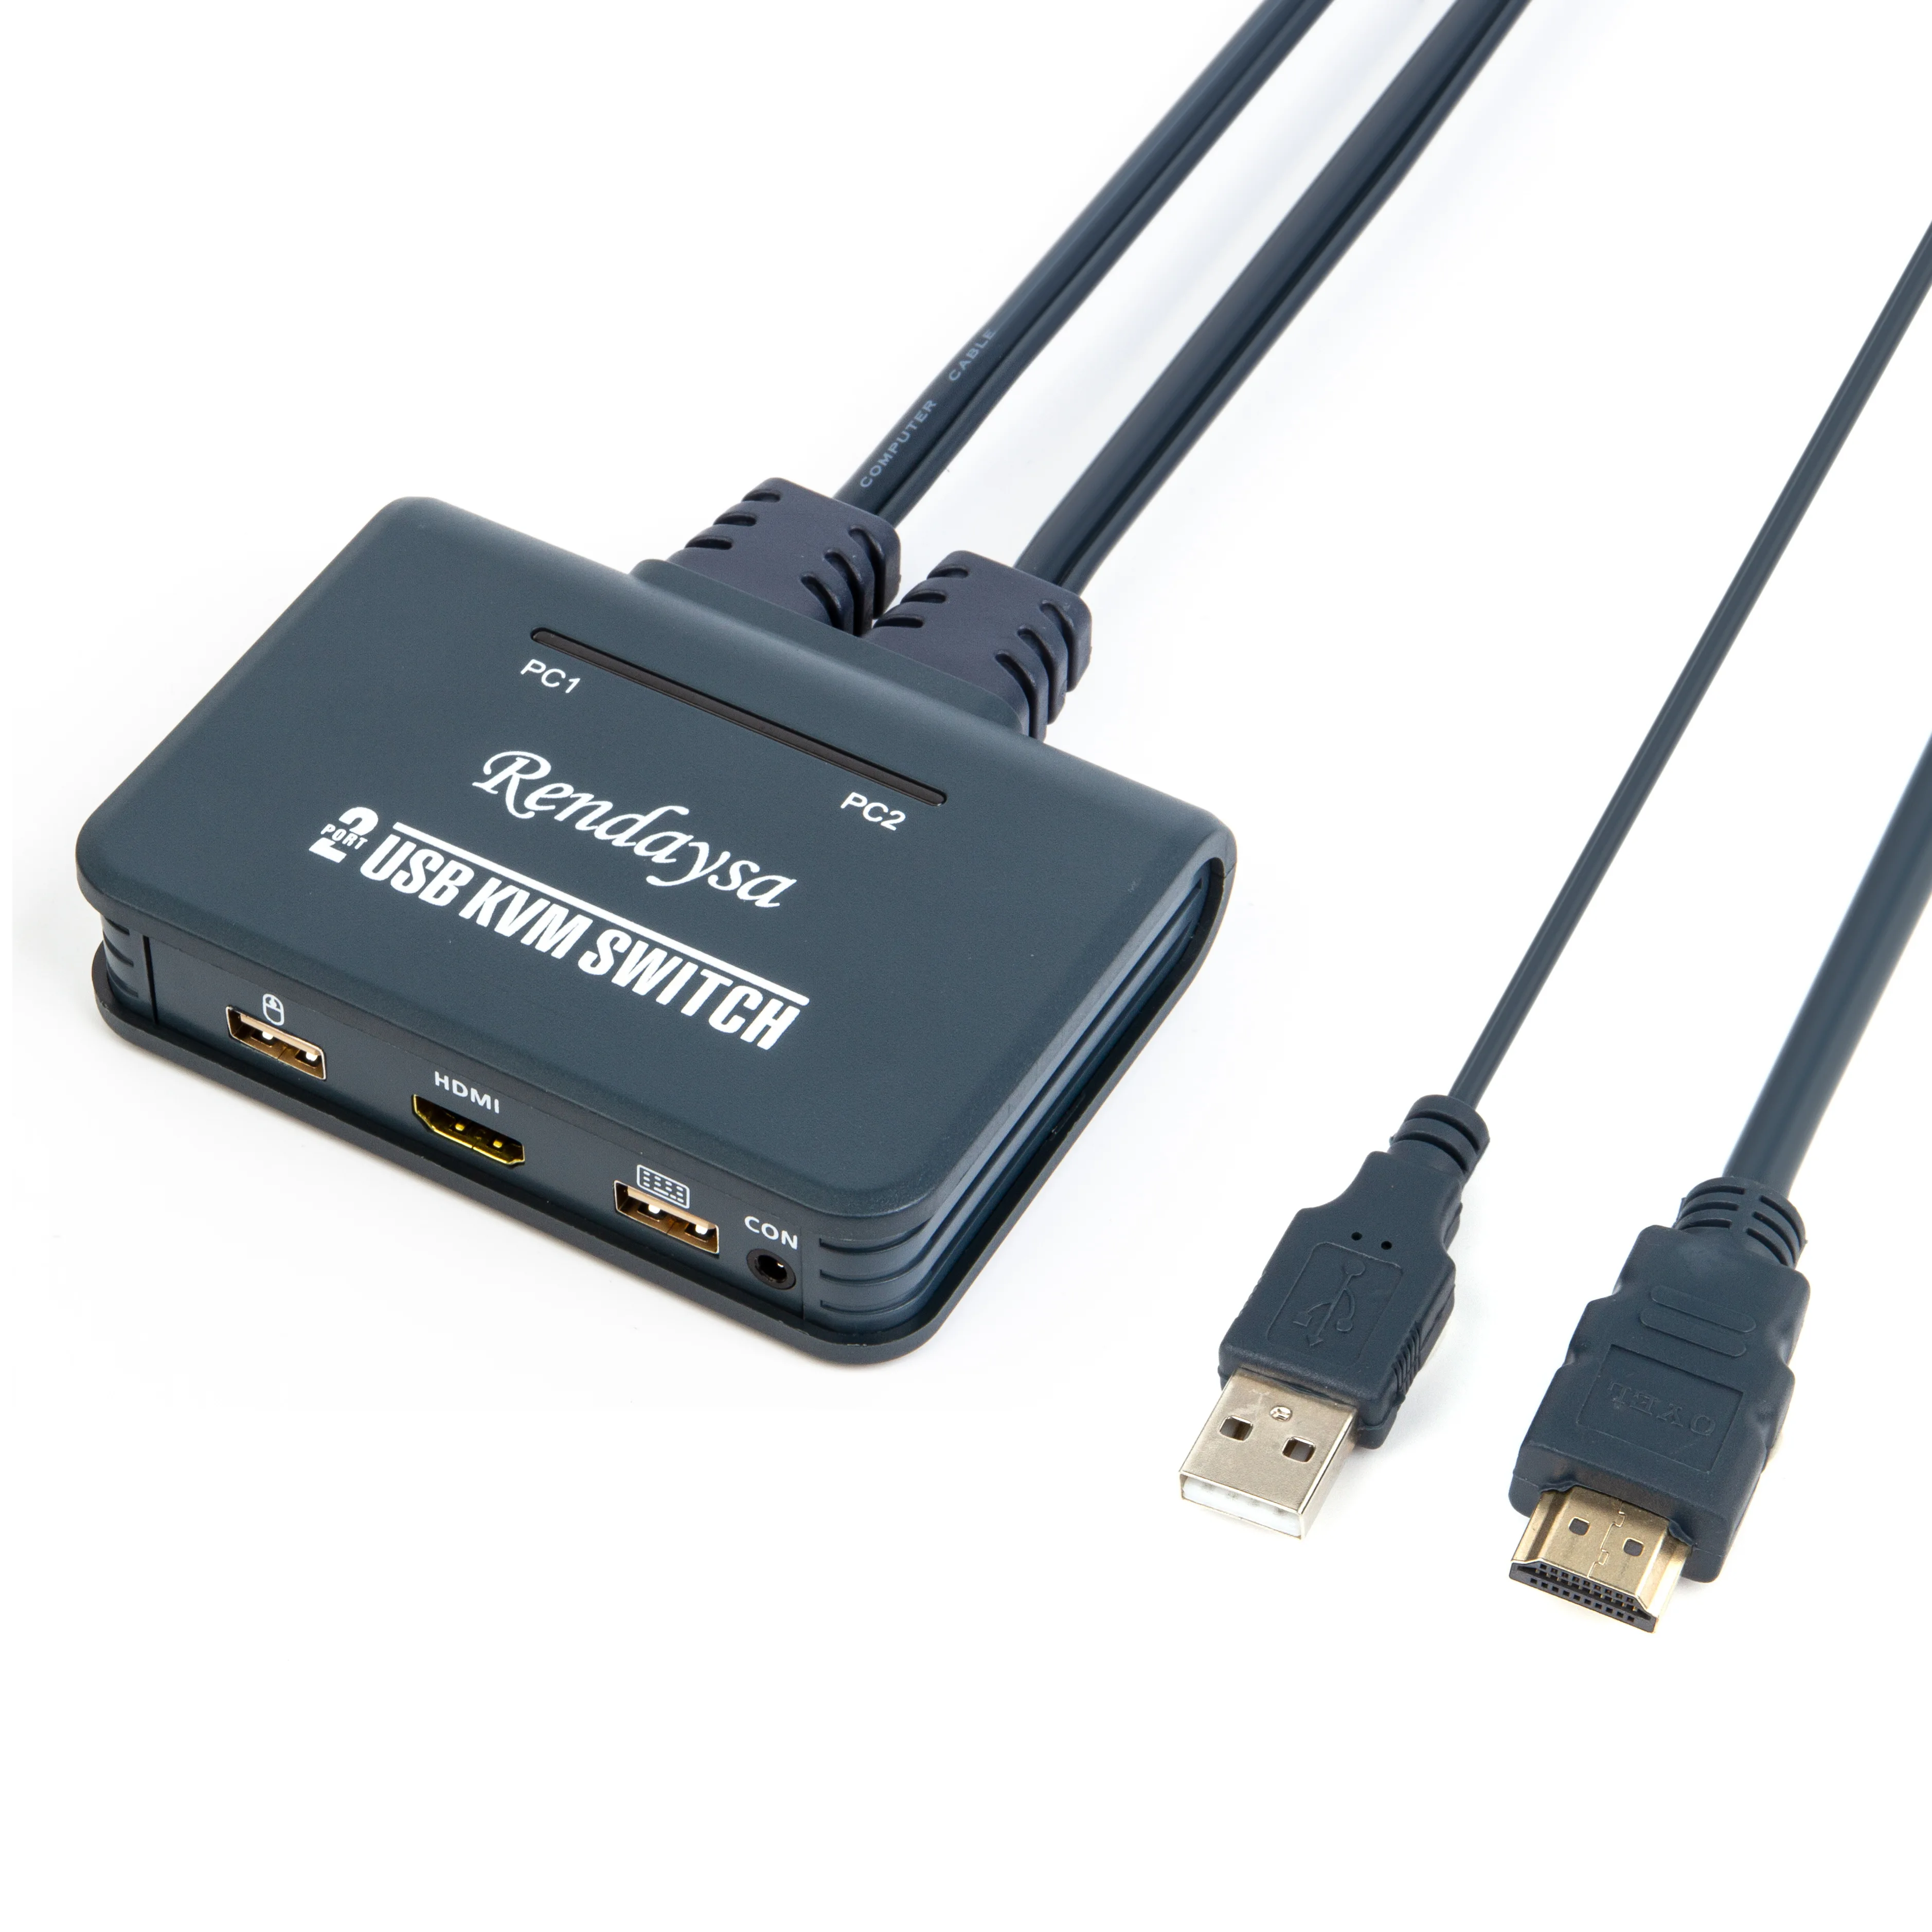 HDMI KVM переключатель, Модернизированный секунд коммутатор 2-переключатель порта HDMI мульти-компьютерная USB мышь и клавиатура переключатель для компьютера